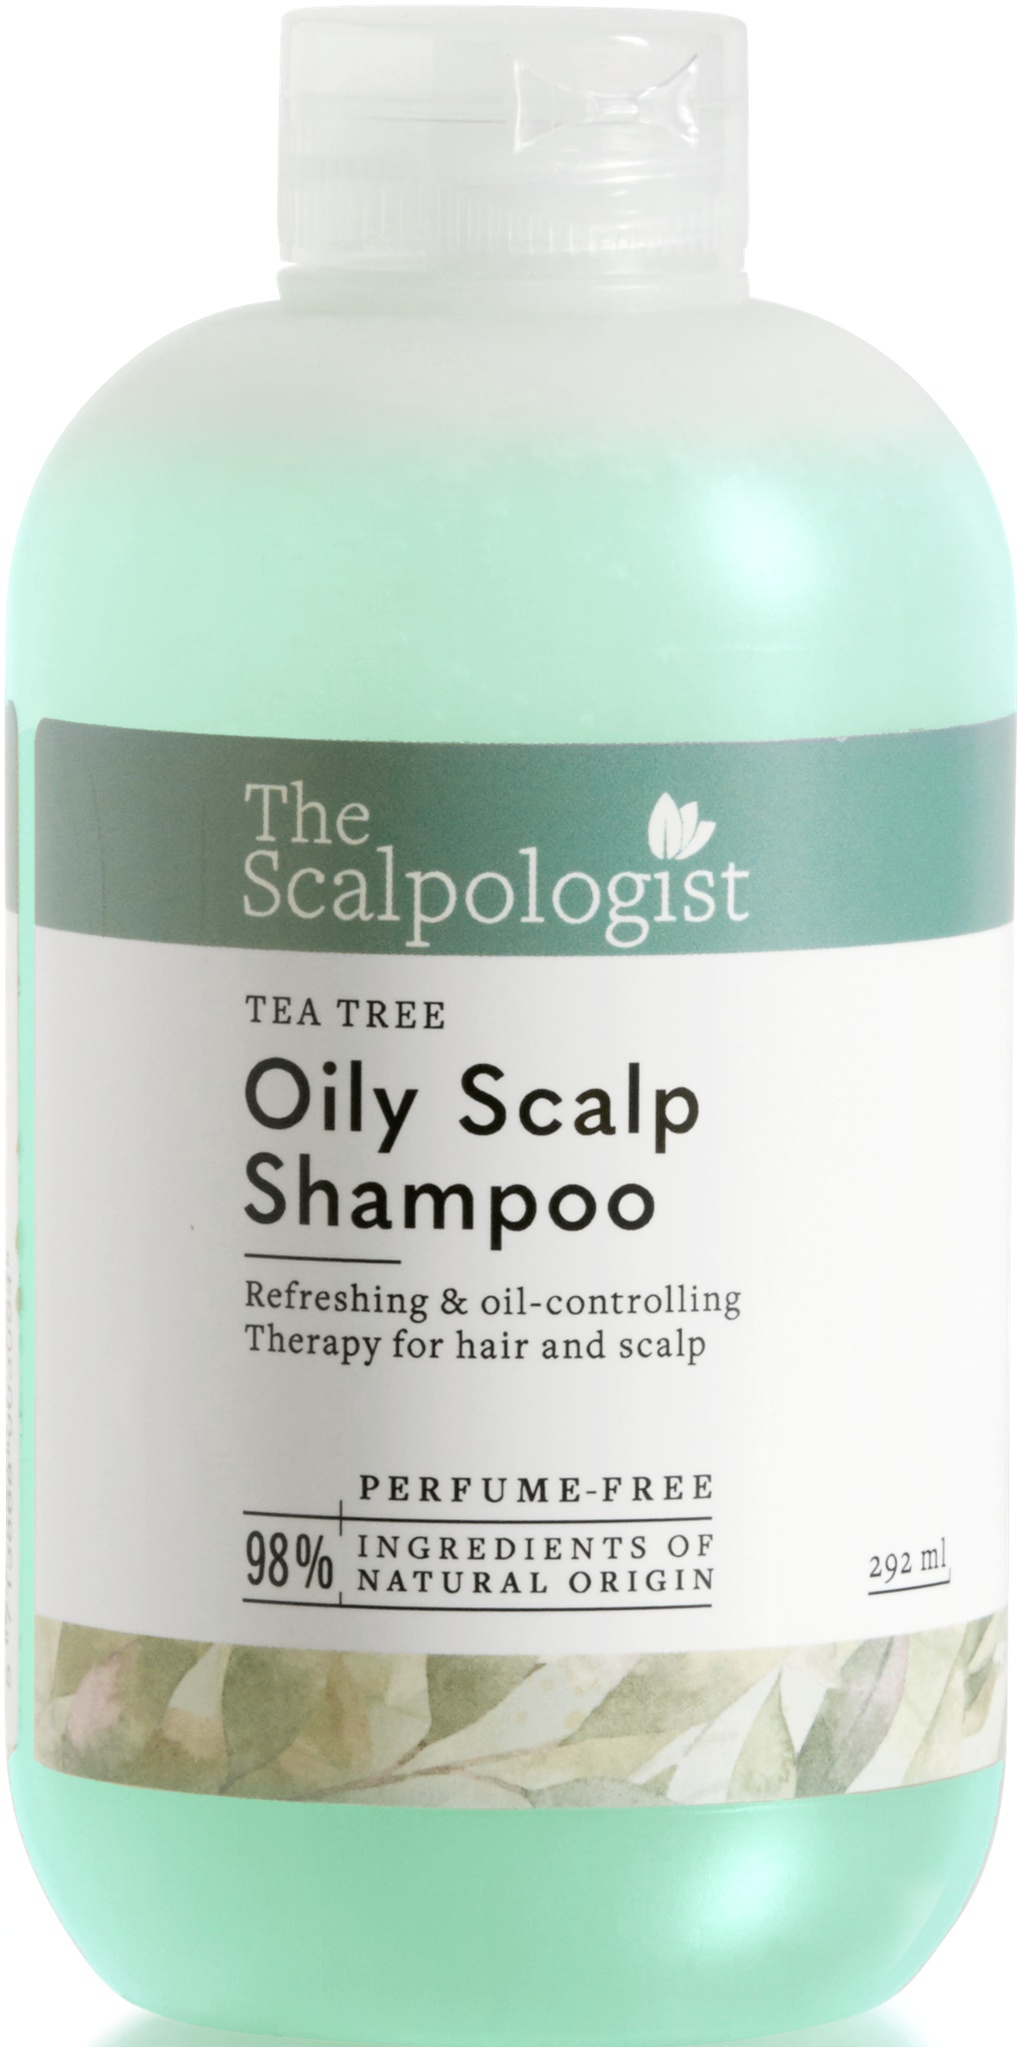 The Scalpologist Oily Scalp Shampoo